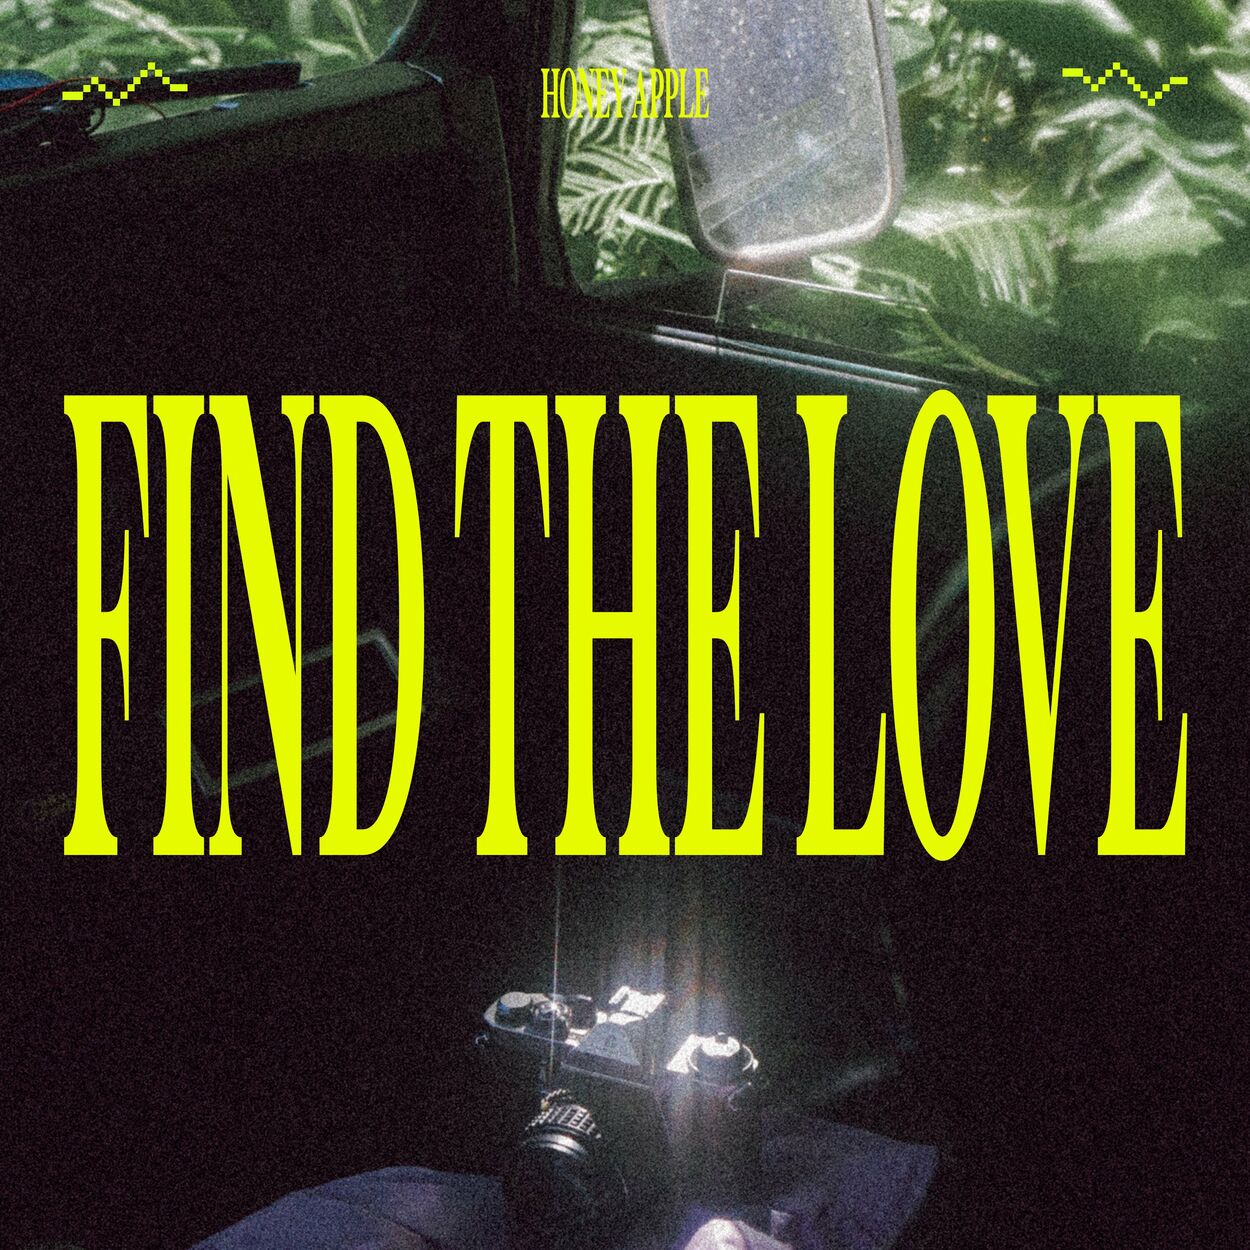 Honey Apple – Find the love – Single